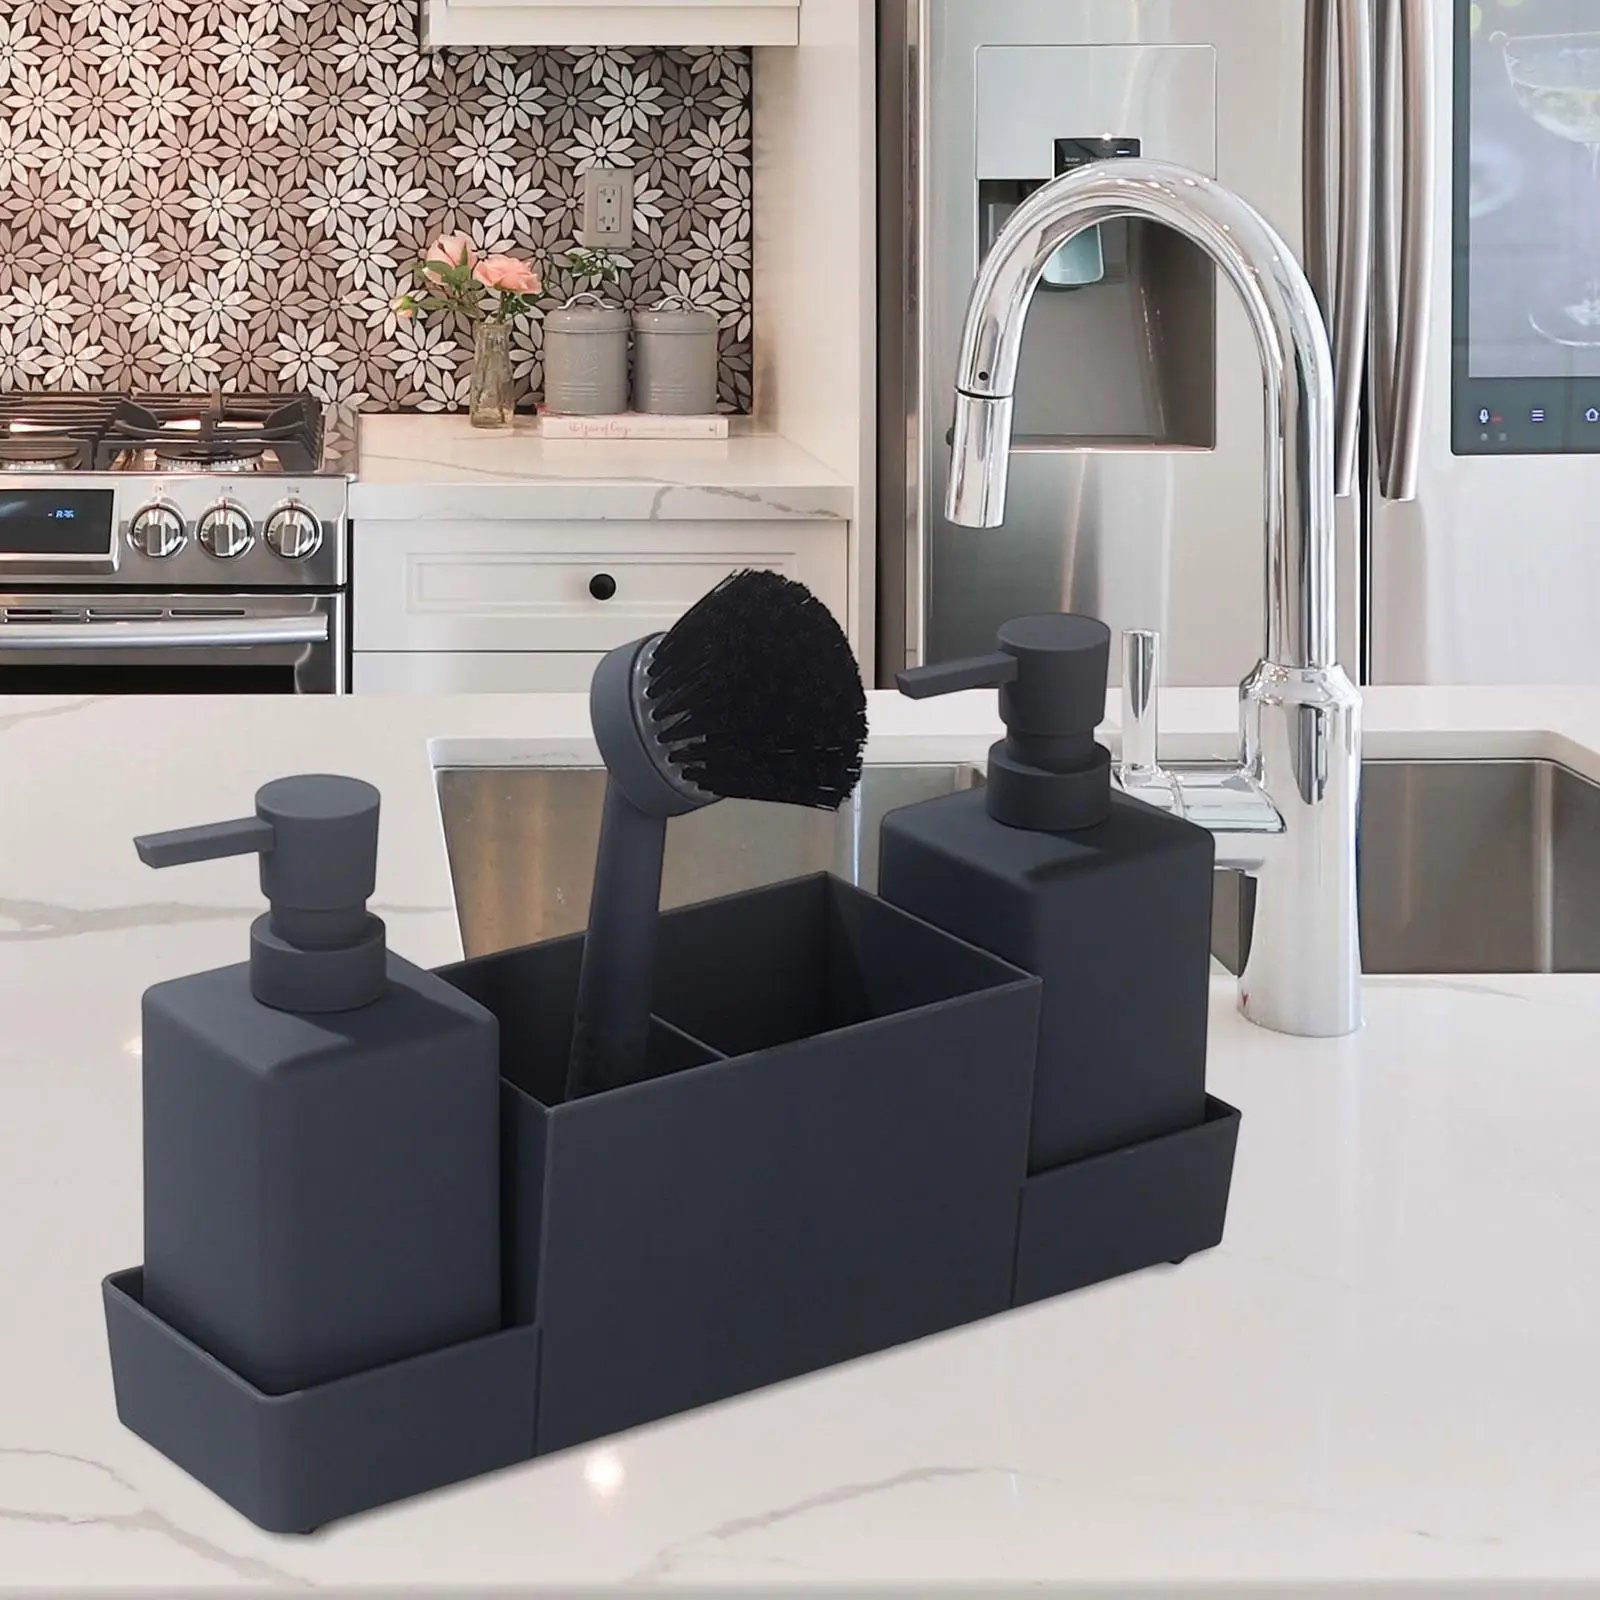 4Pcs Kitchen Soap Dispenser with Sponge Holder for Organizer Kitchen Sink